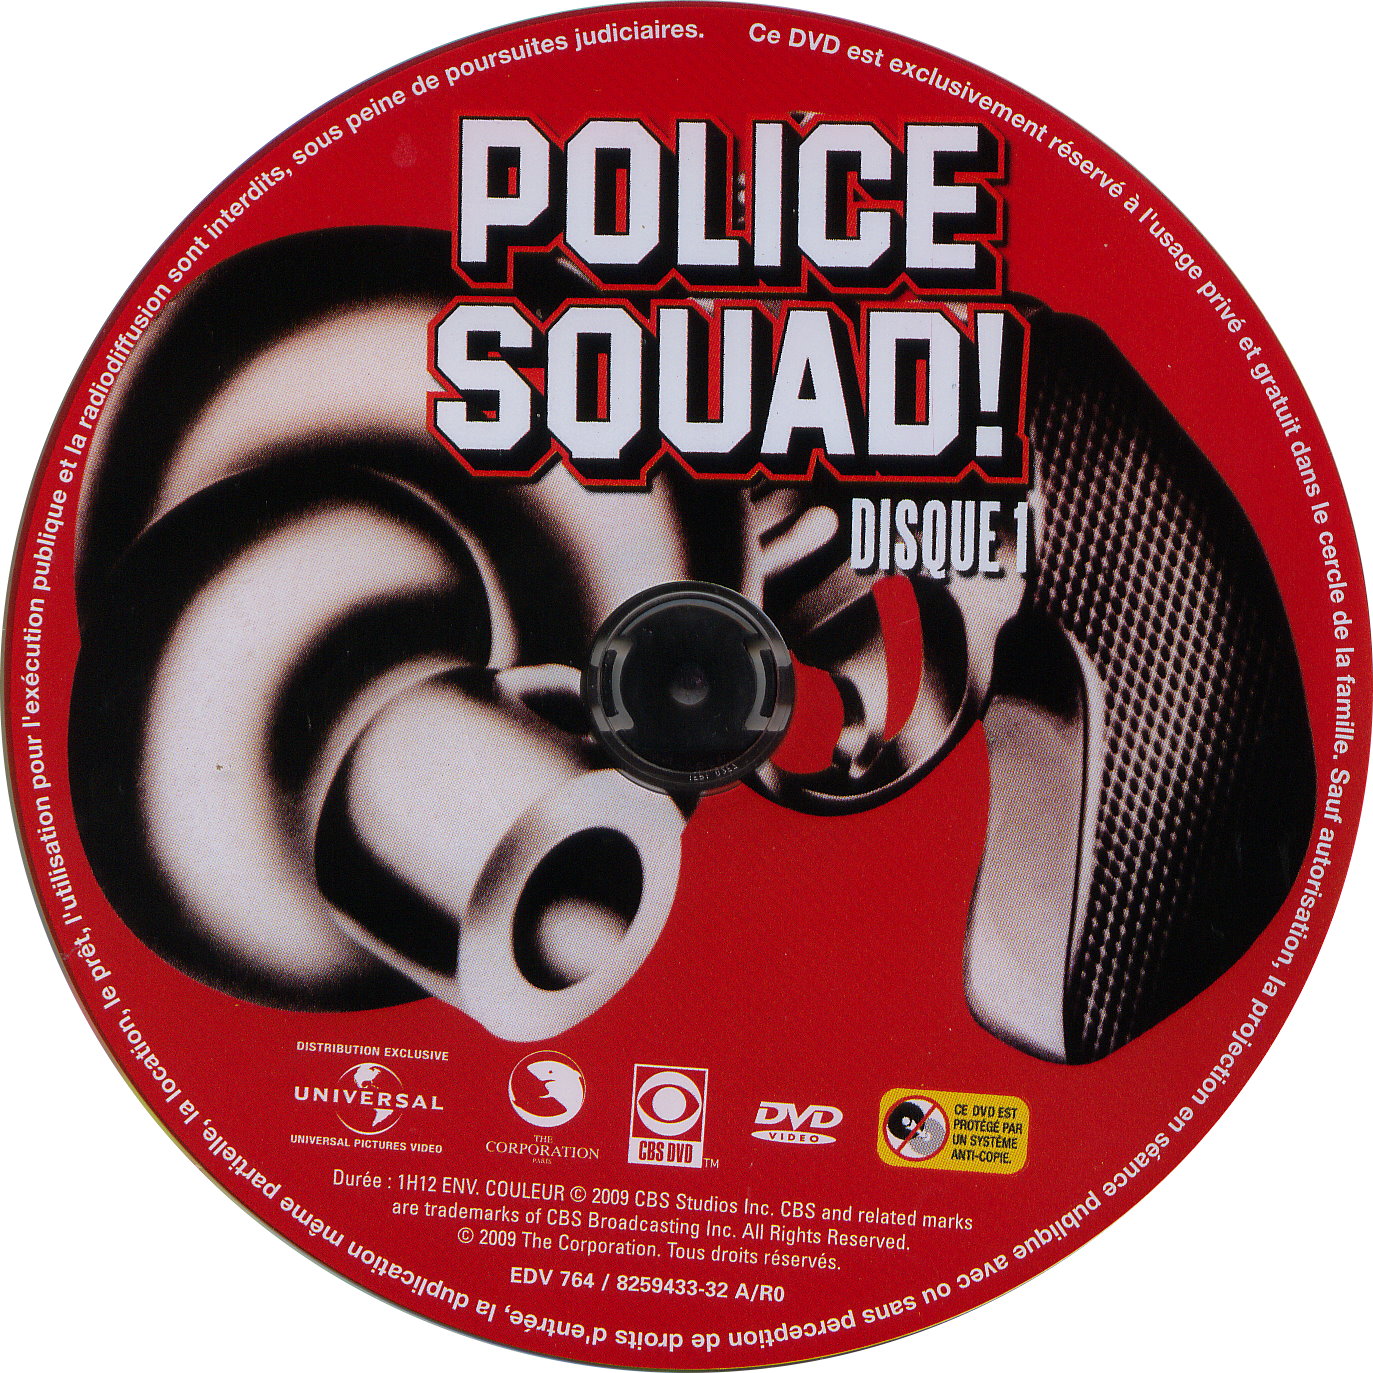 Police squad DISC 1